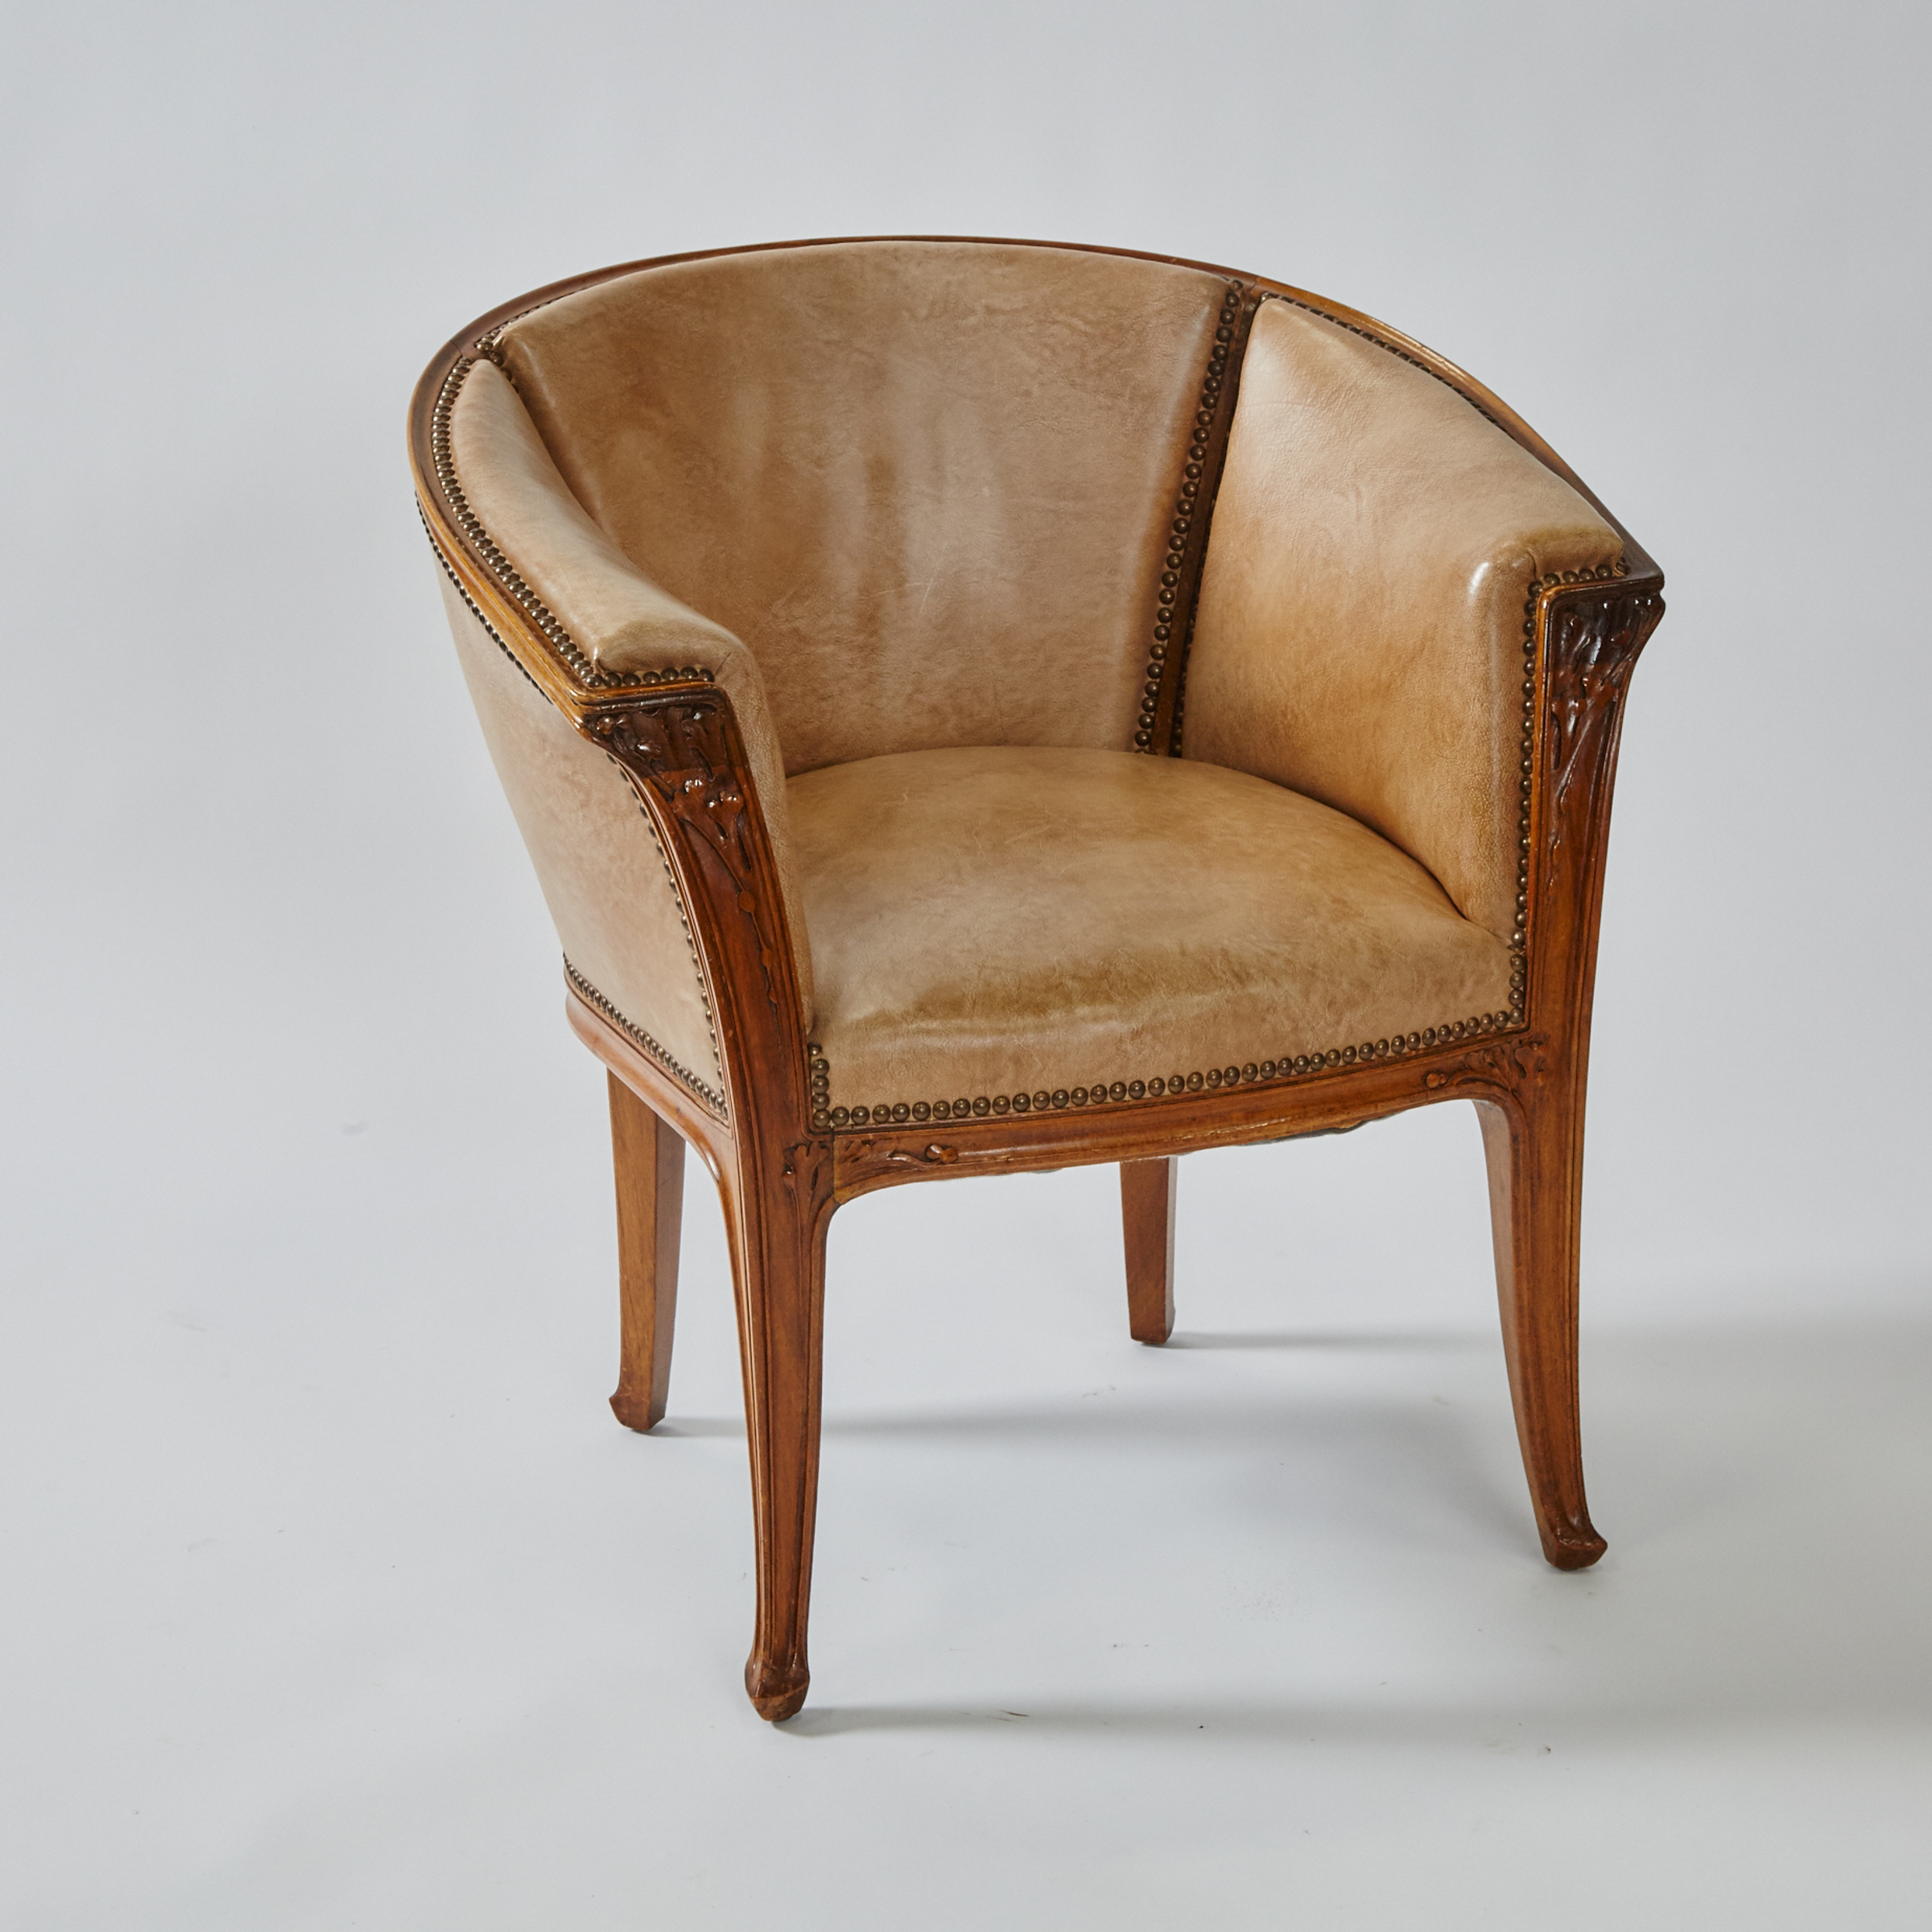 Louis Majorelle French Art Nouveau Carved Walnut Club Chair, 1919